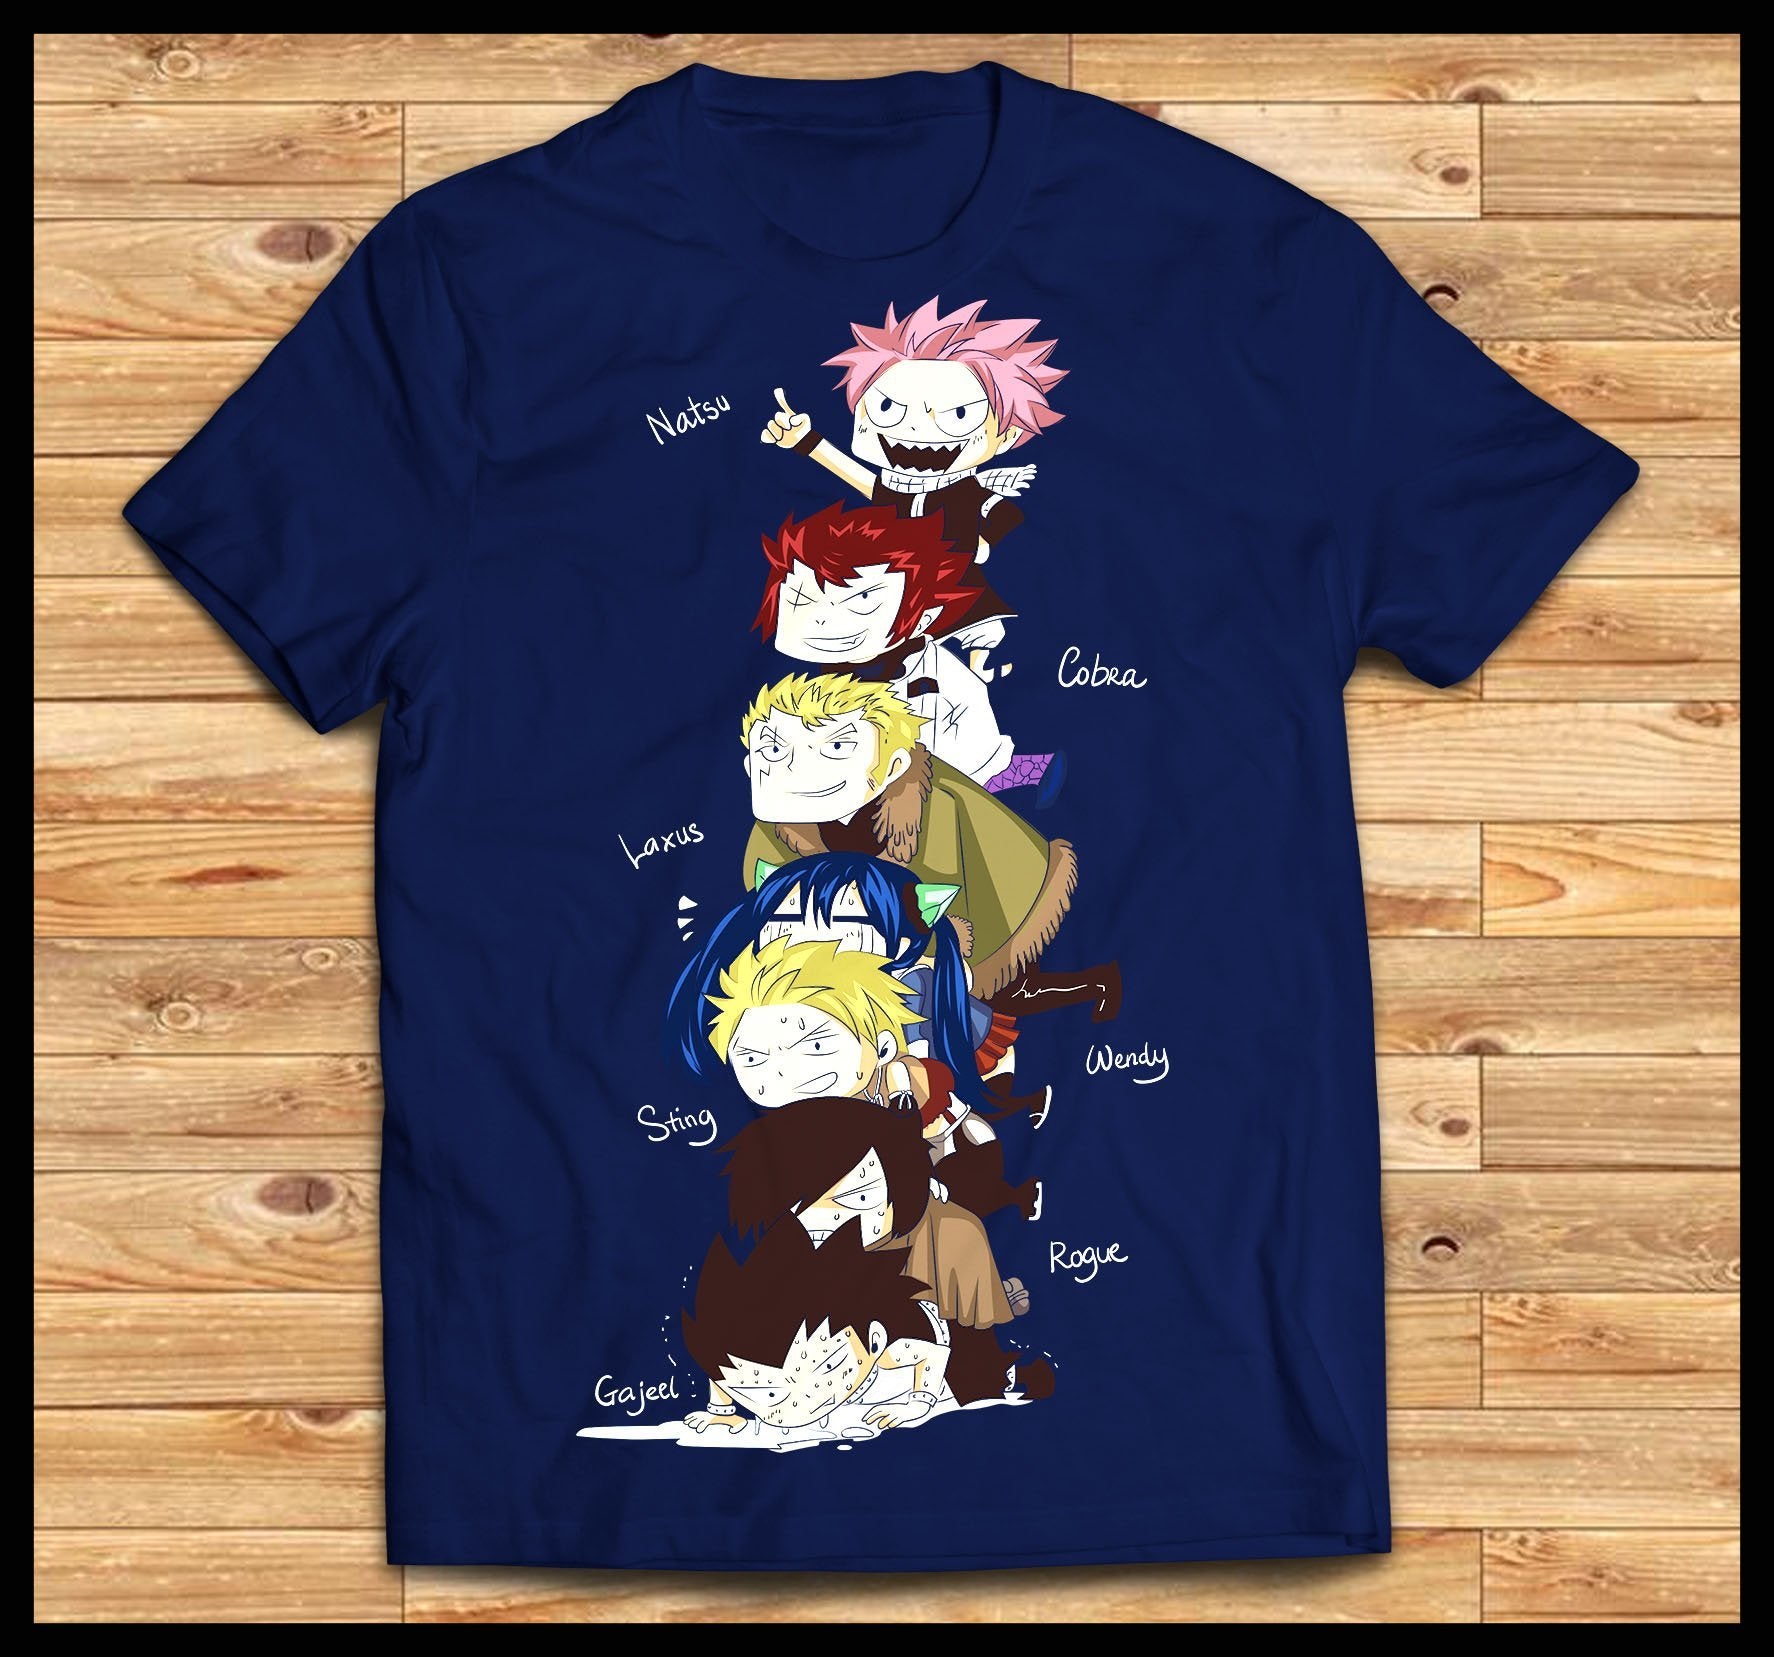 Fairy Tail Shirt